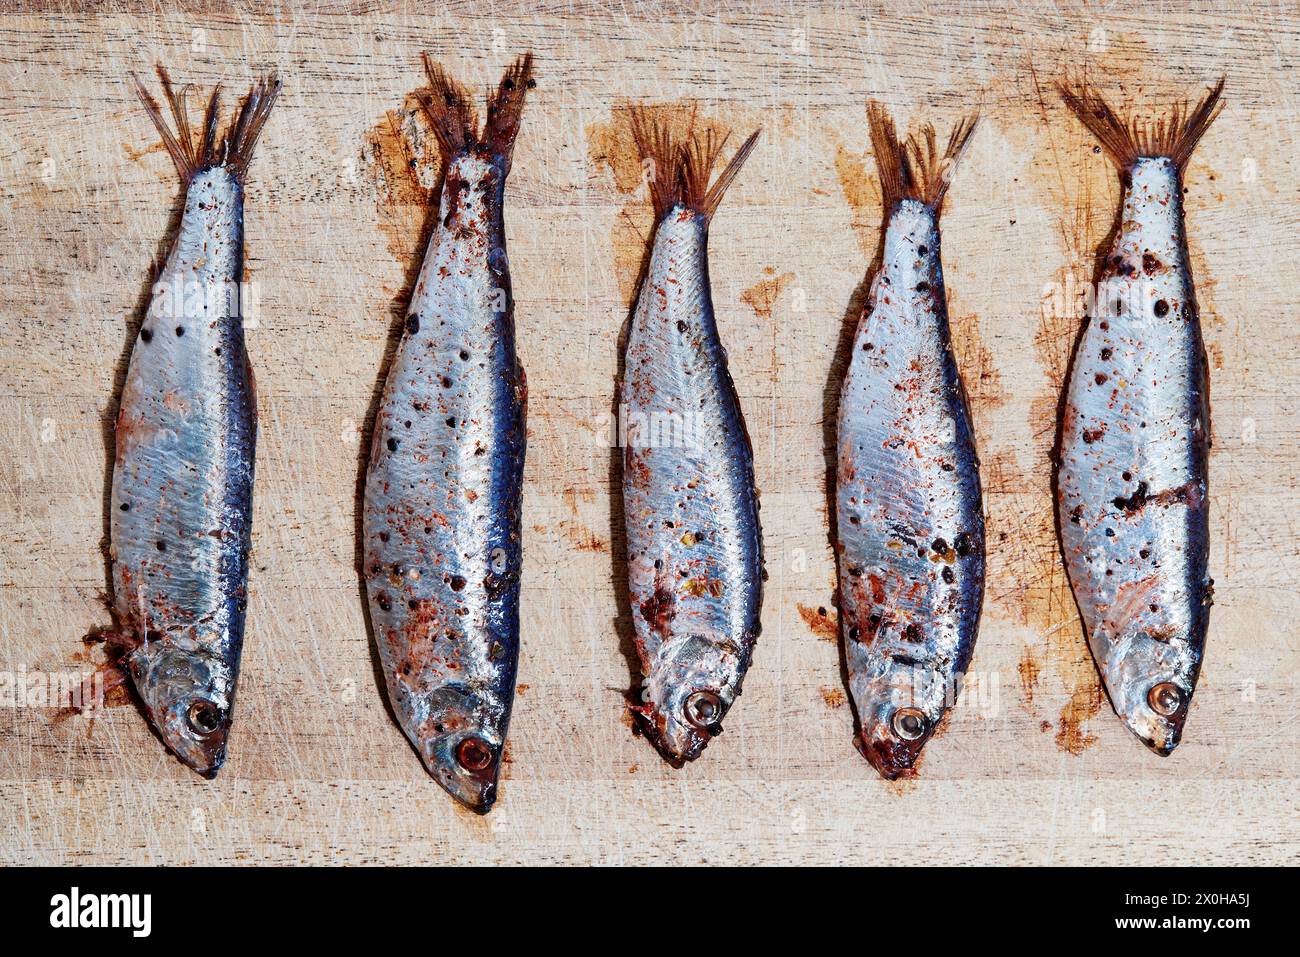 Ansjovis, Swedish anchovies (i.e. sprats) on a wooden board Stock Photo